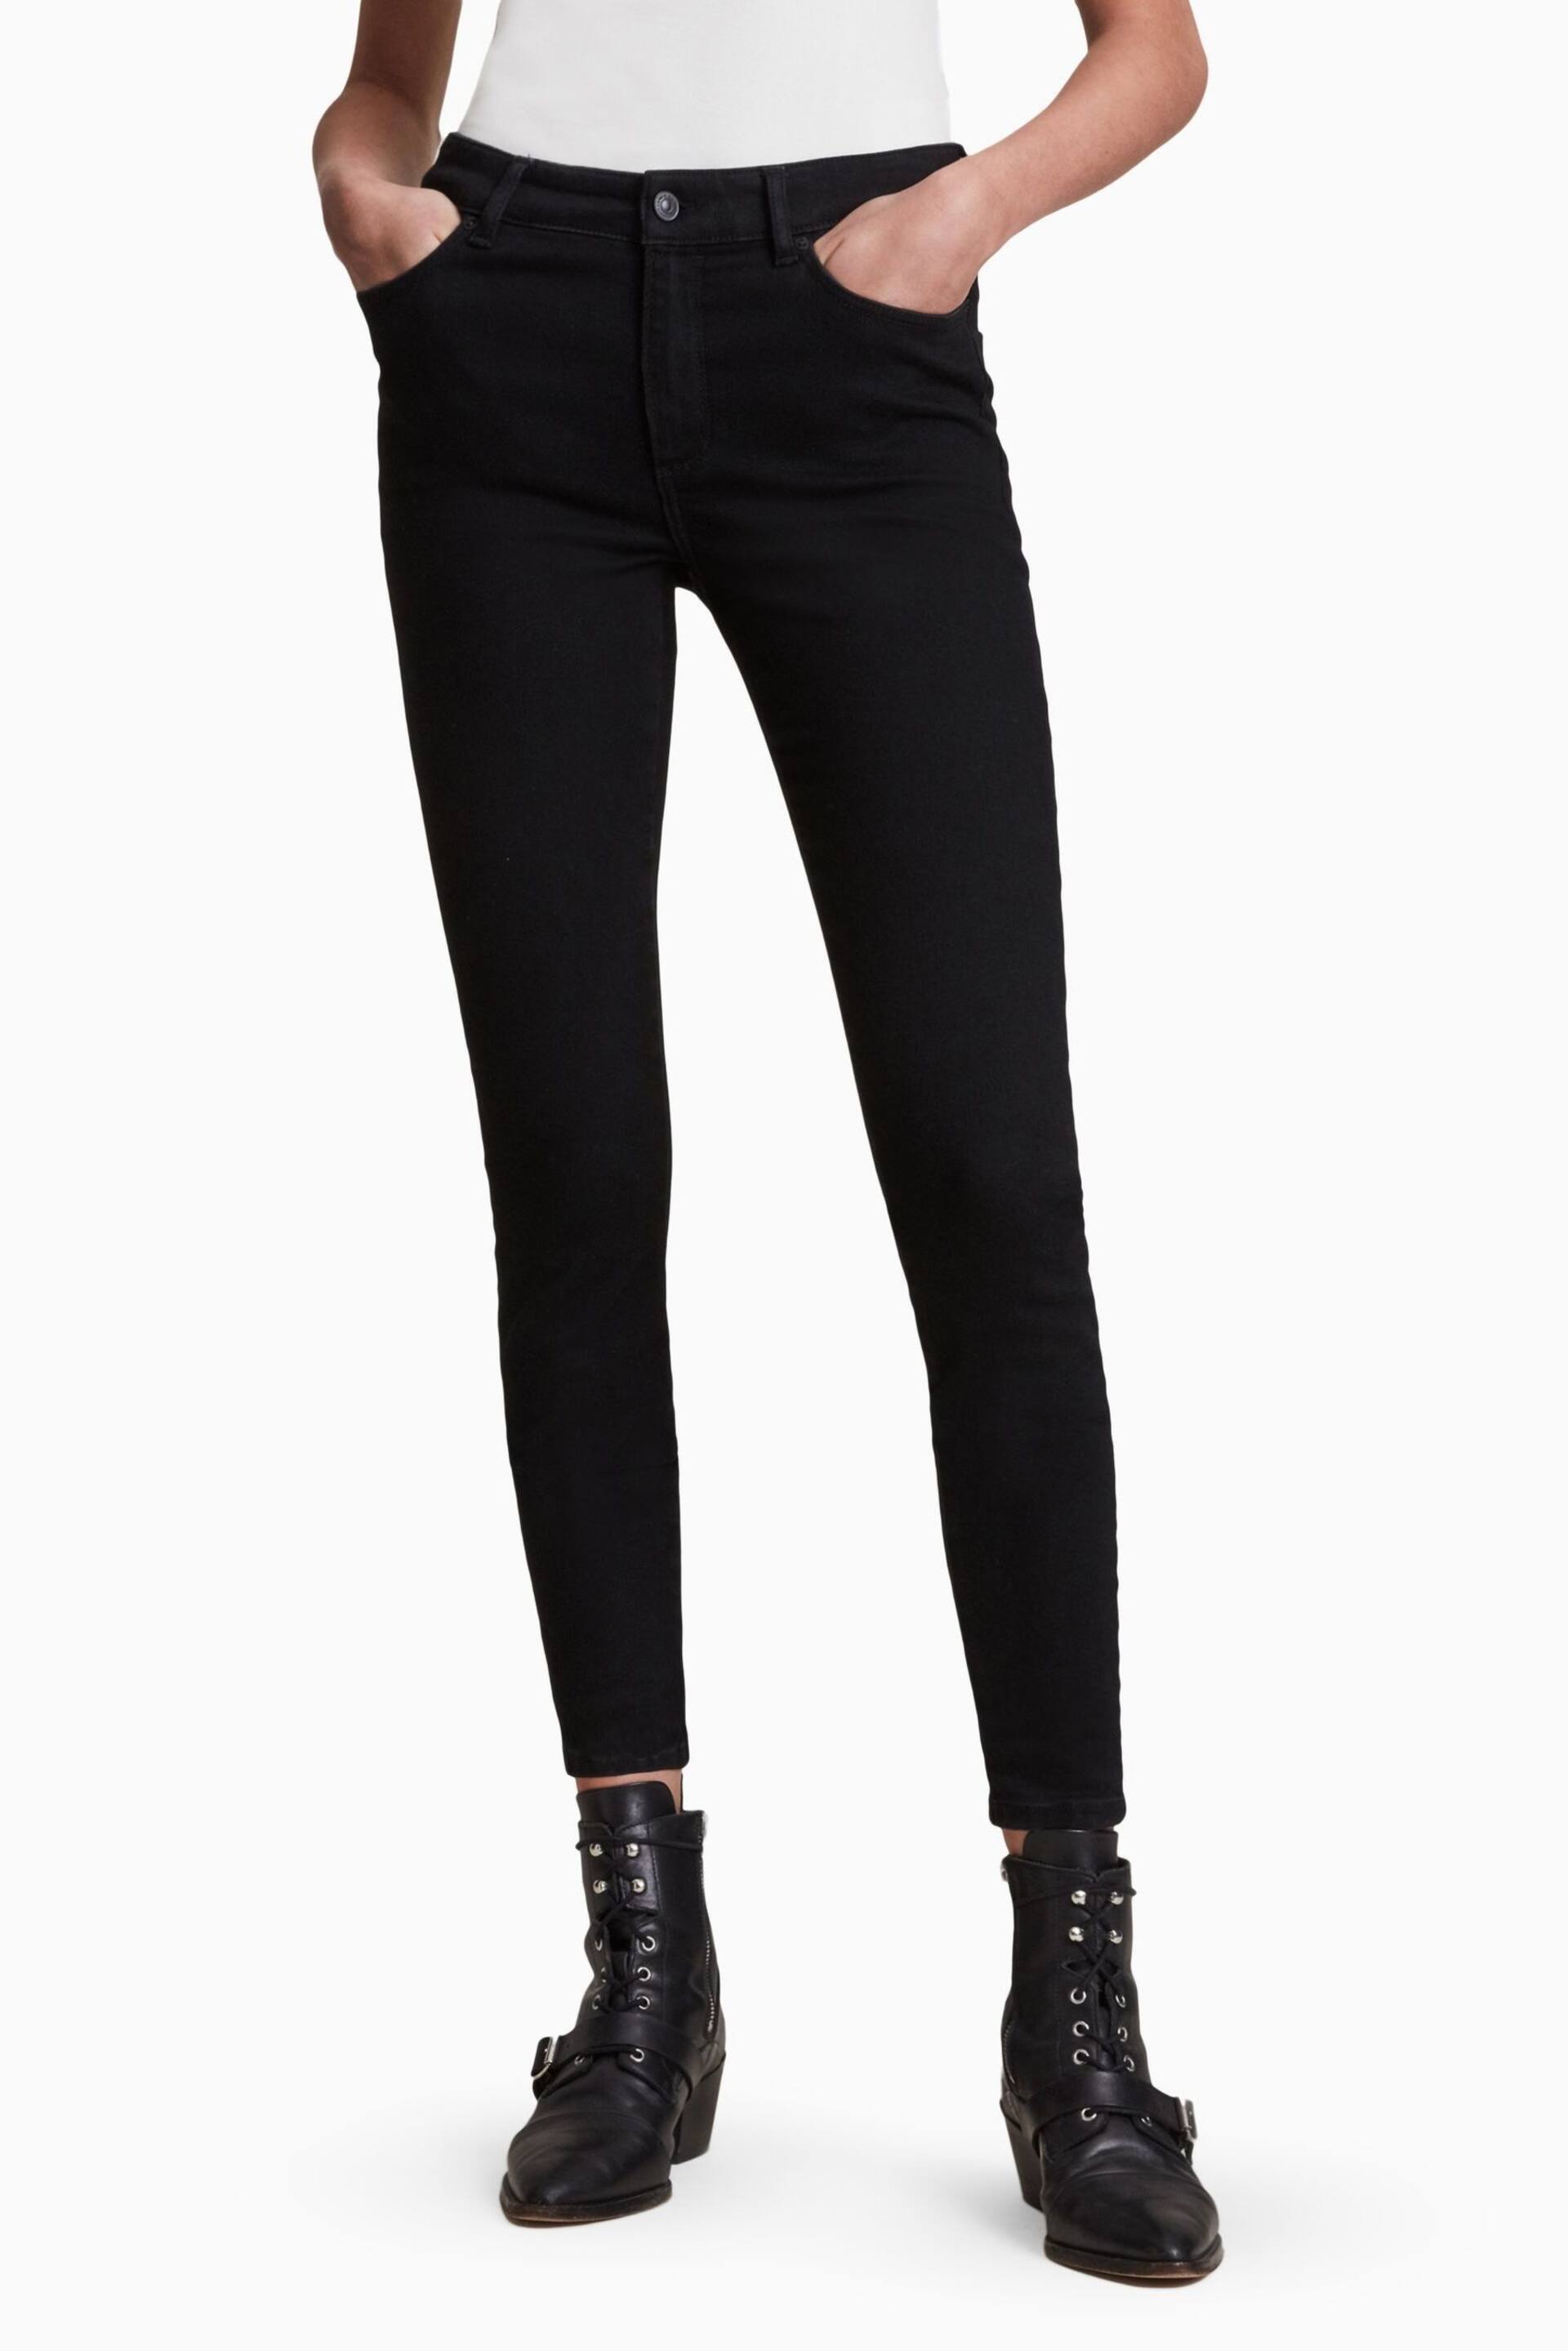 AllSaints Black Miller Sizeme Jeans - Image 1 of 8